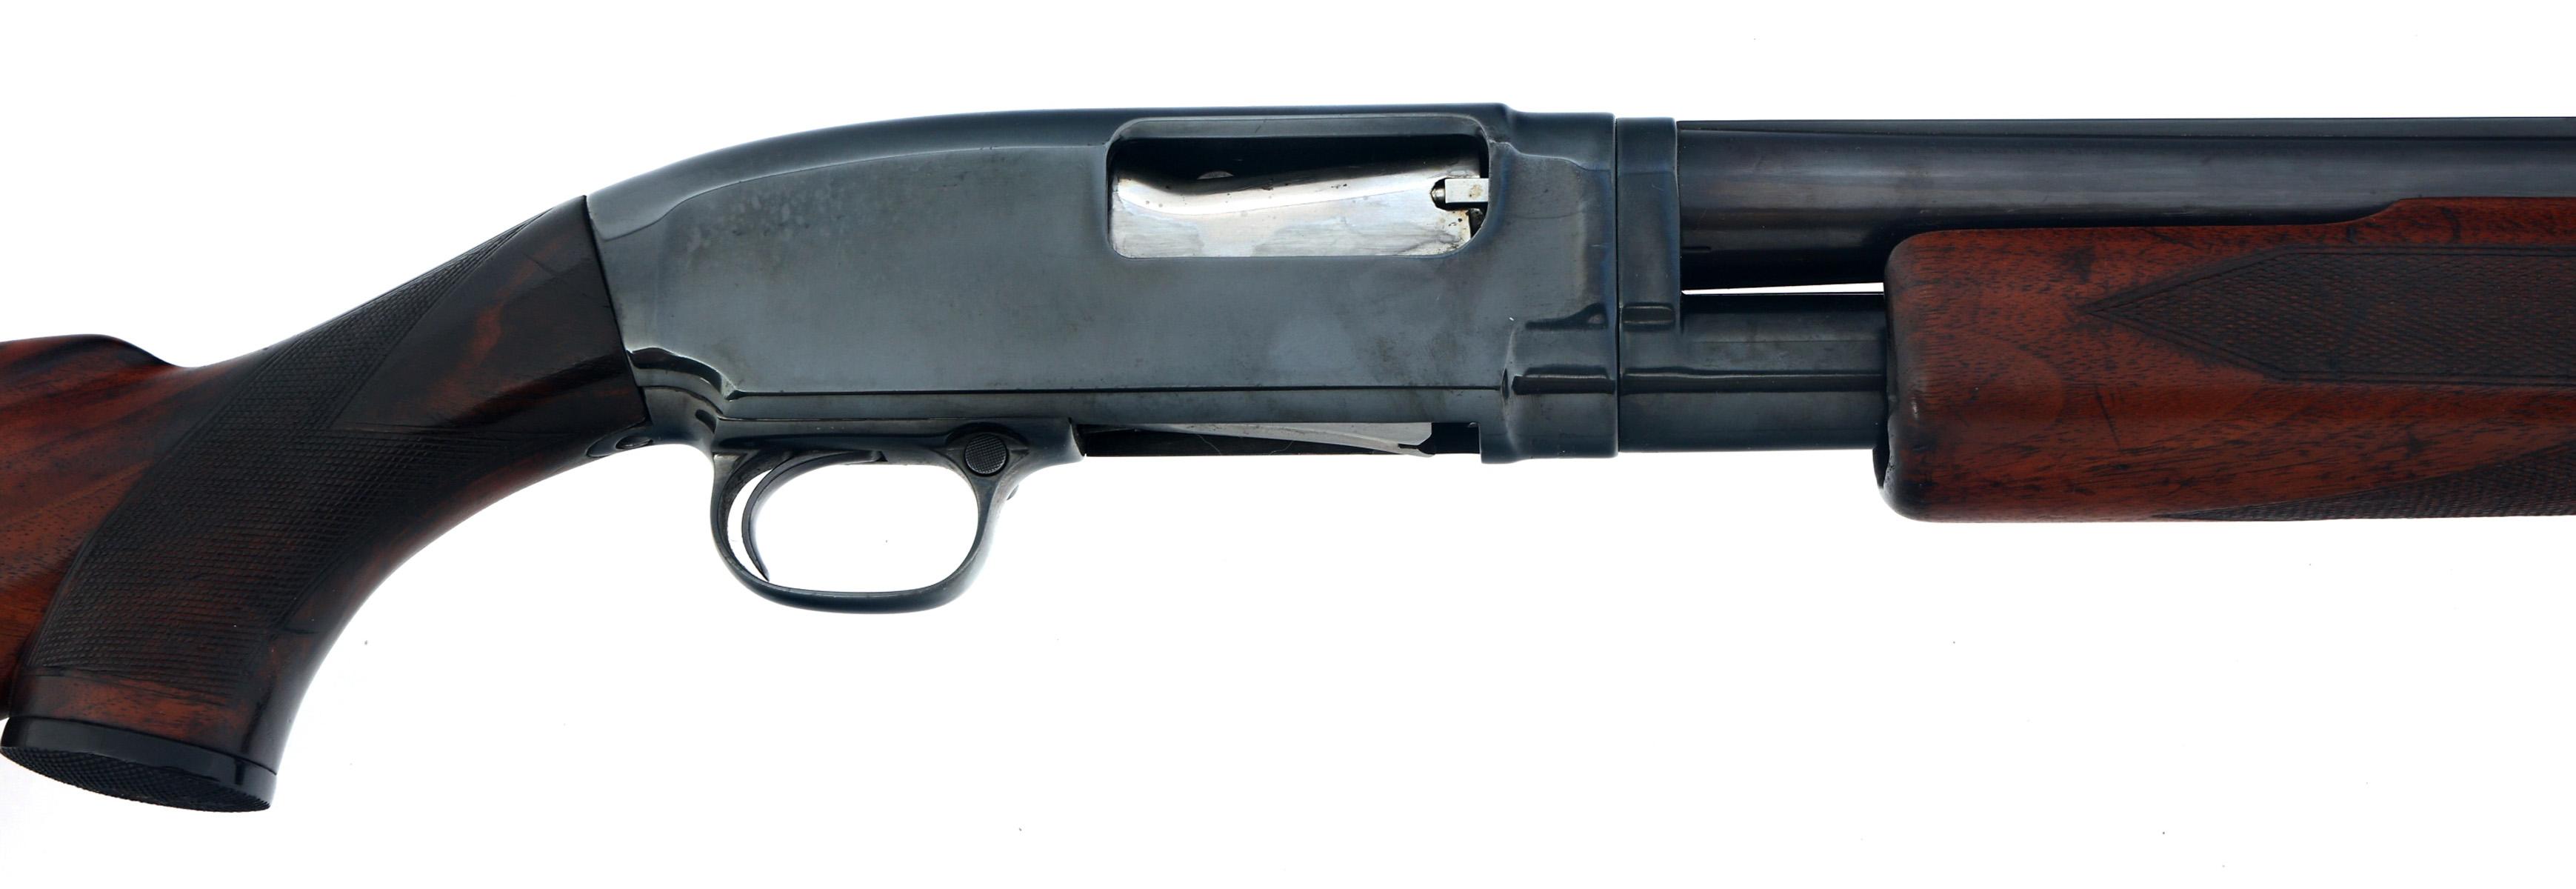 1938 WINCHESTER MODEL 12 16 GAUGE SHOTGUN